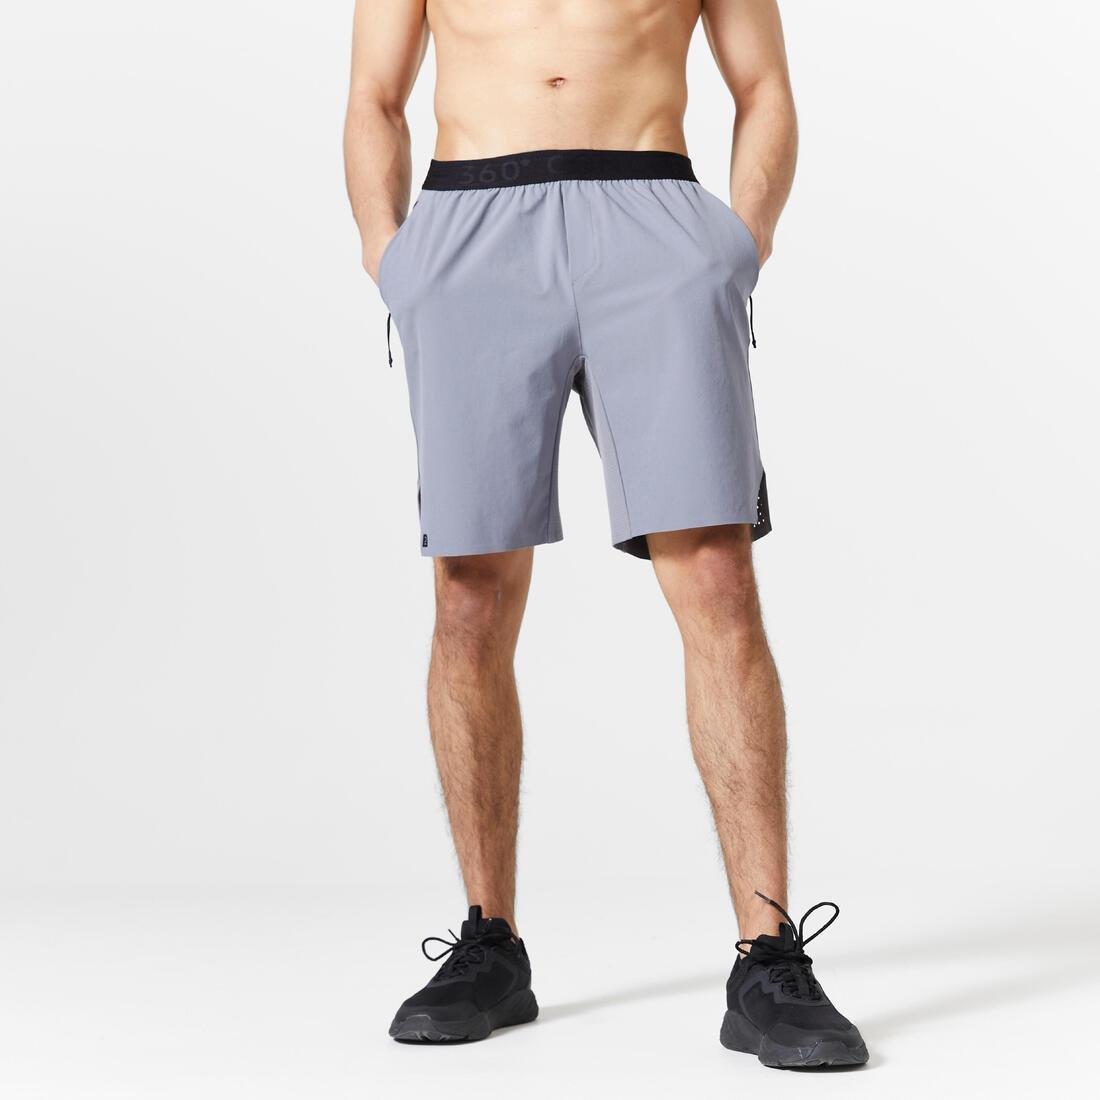 DOMYOS - Men Breathable Performance Fitness Shorts With Zipped Pockets, Grey